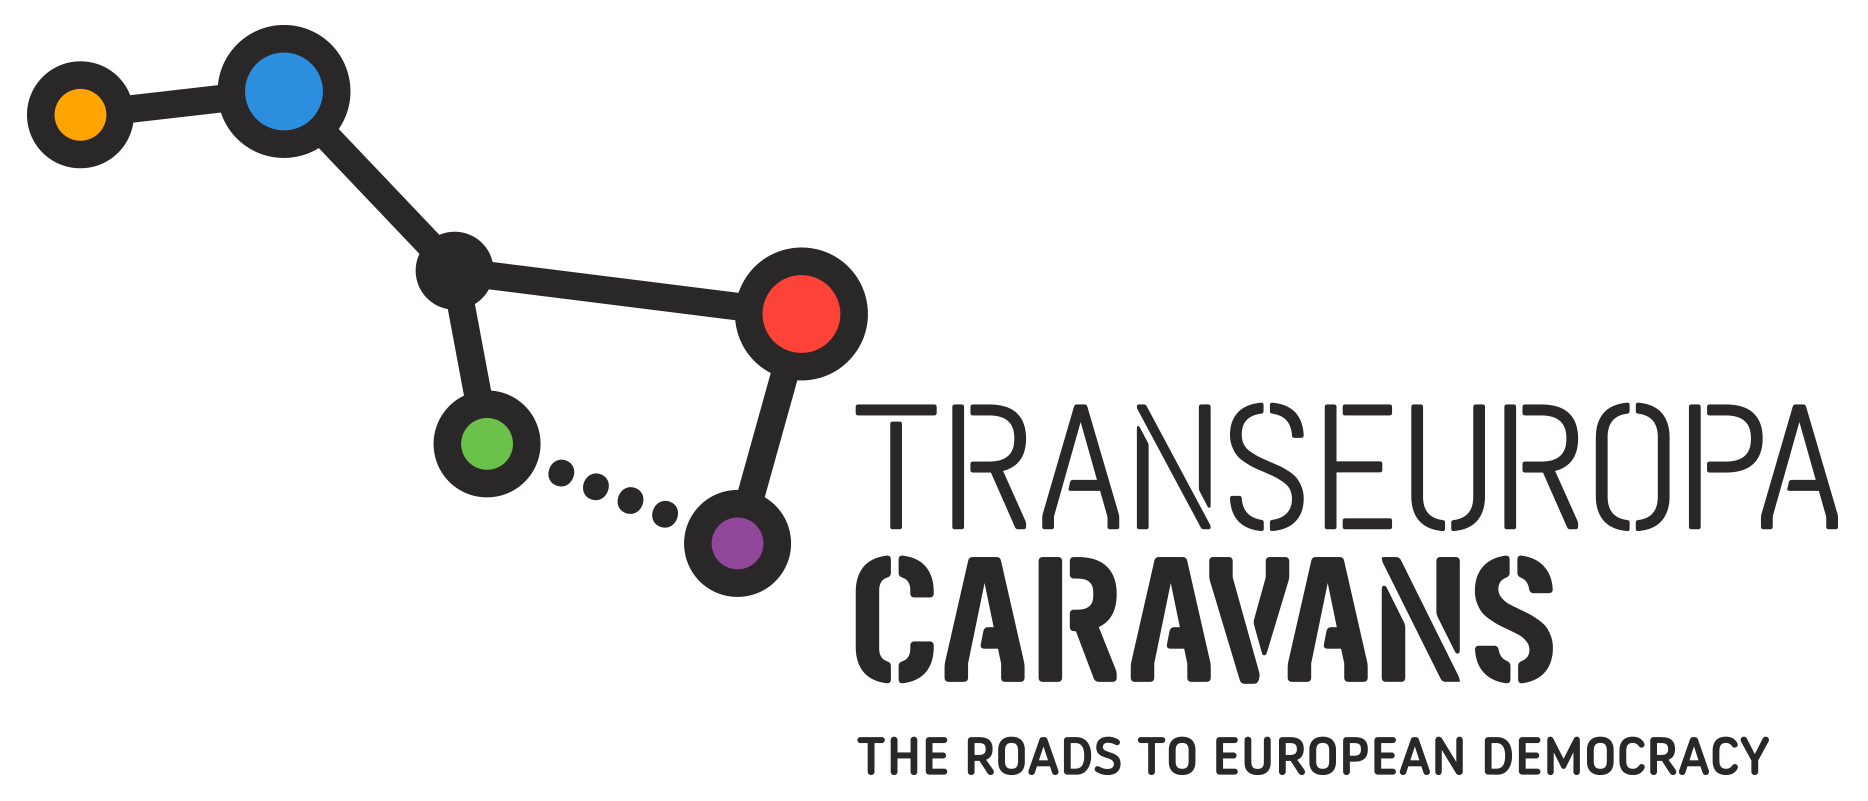 Transeuropa Caravans